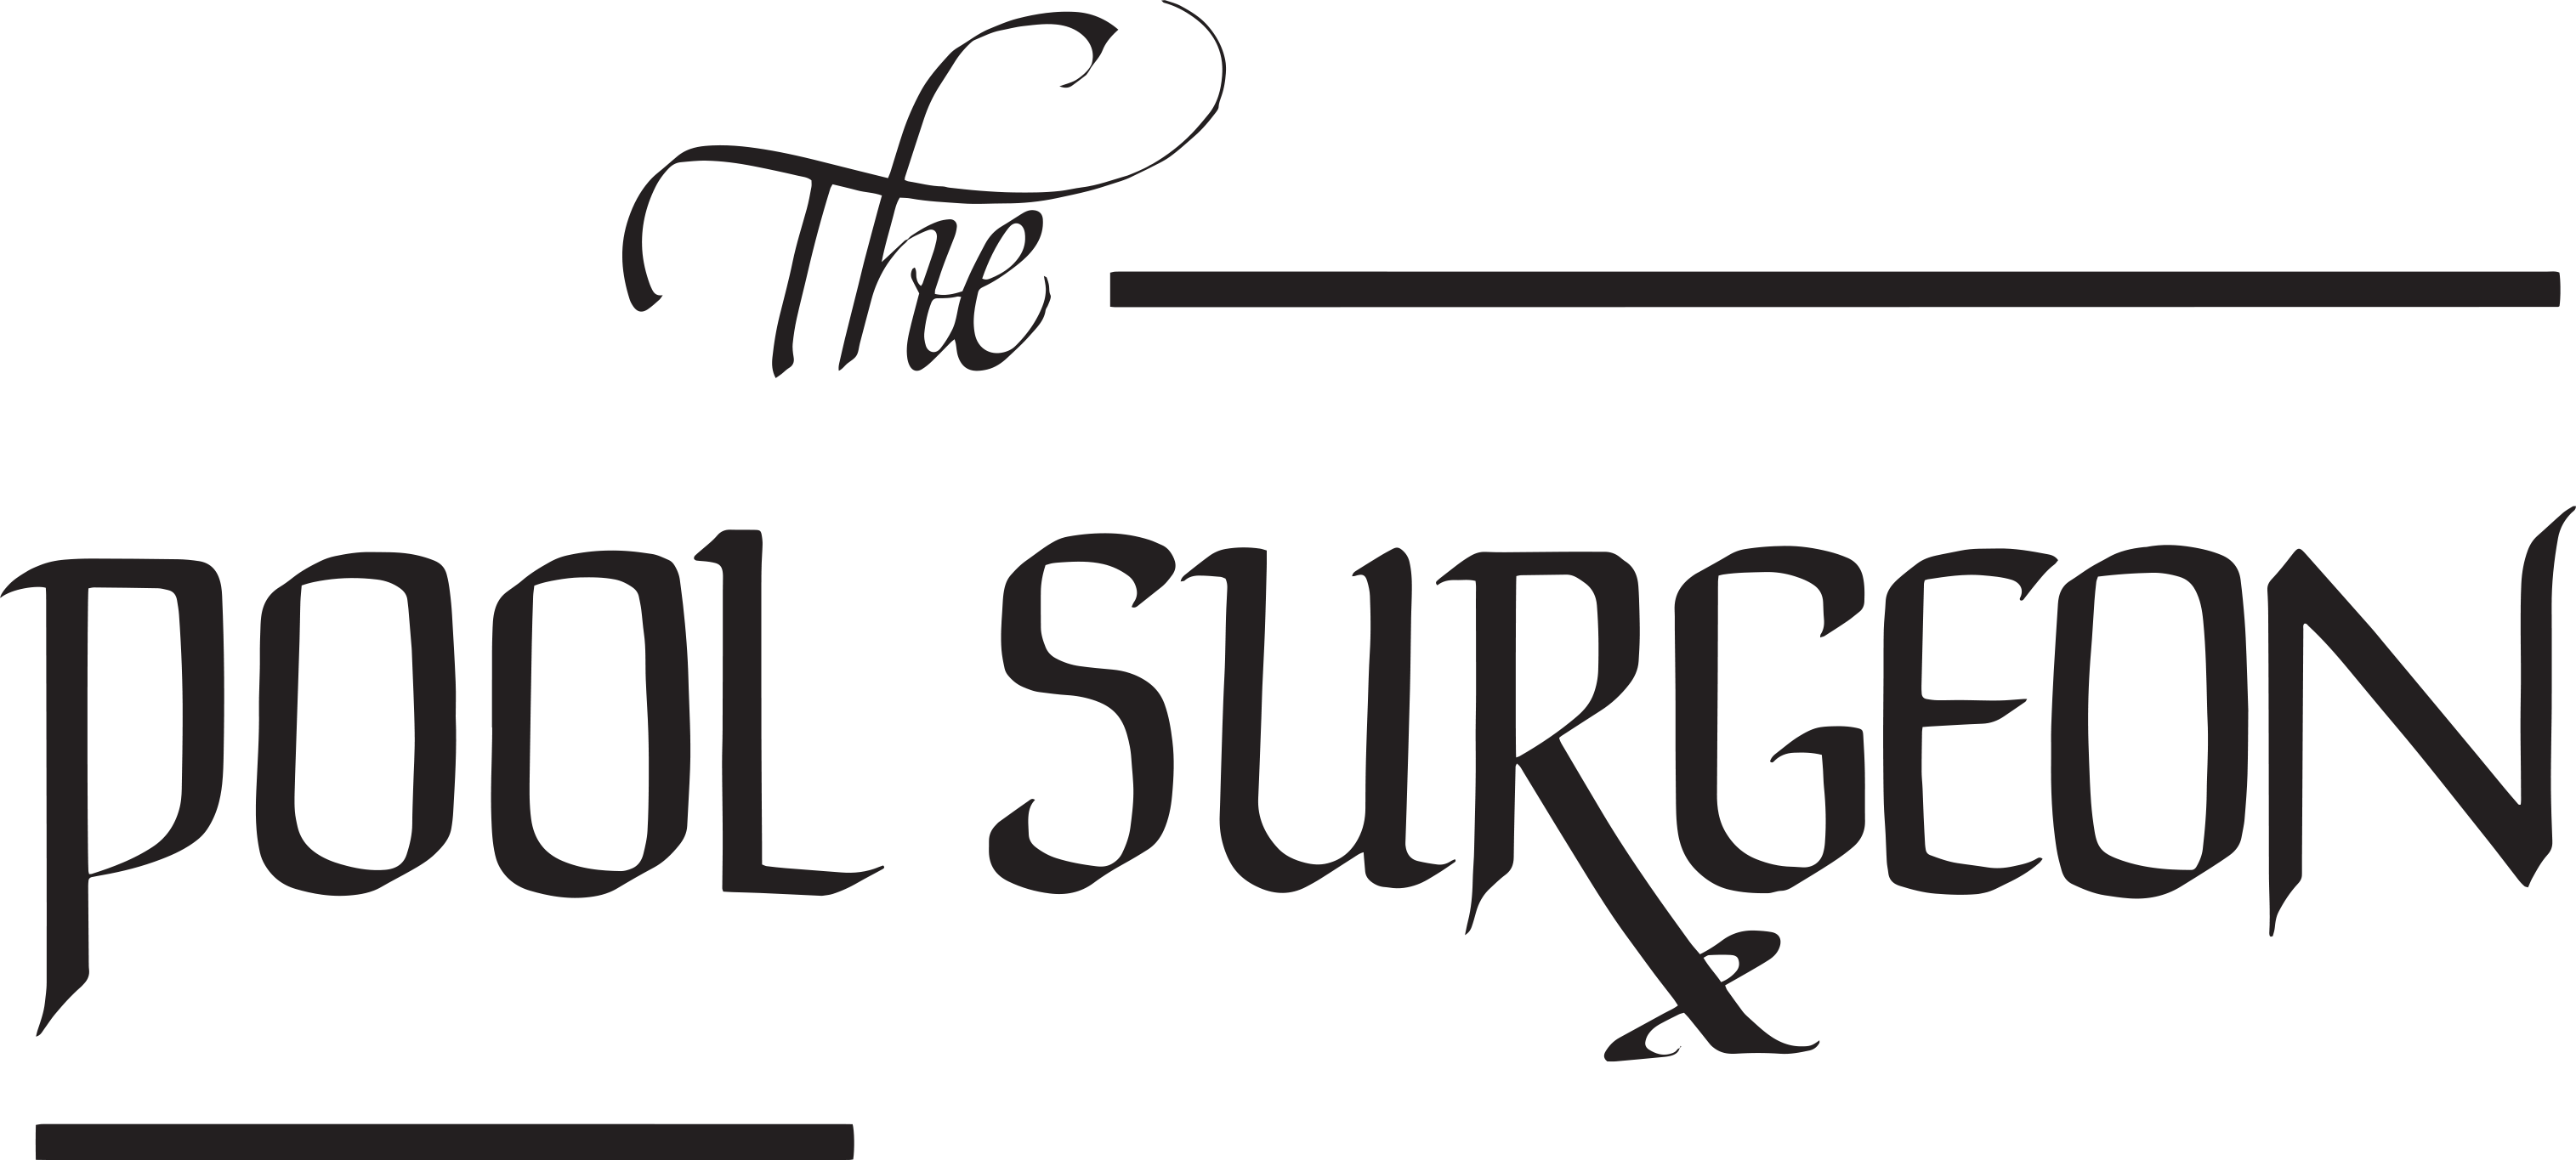 The Pool Surgeon logo new